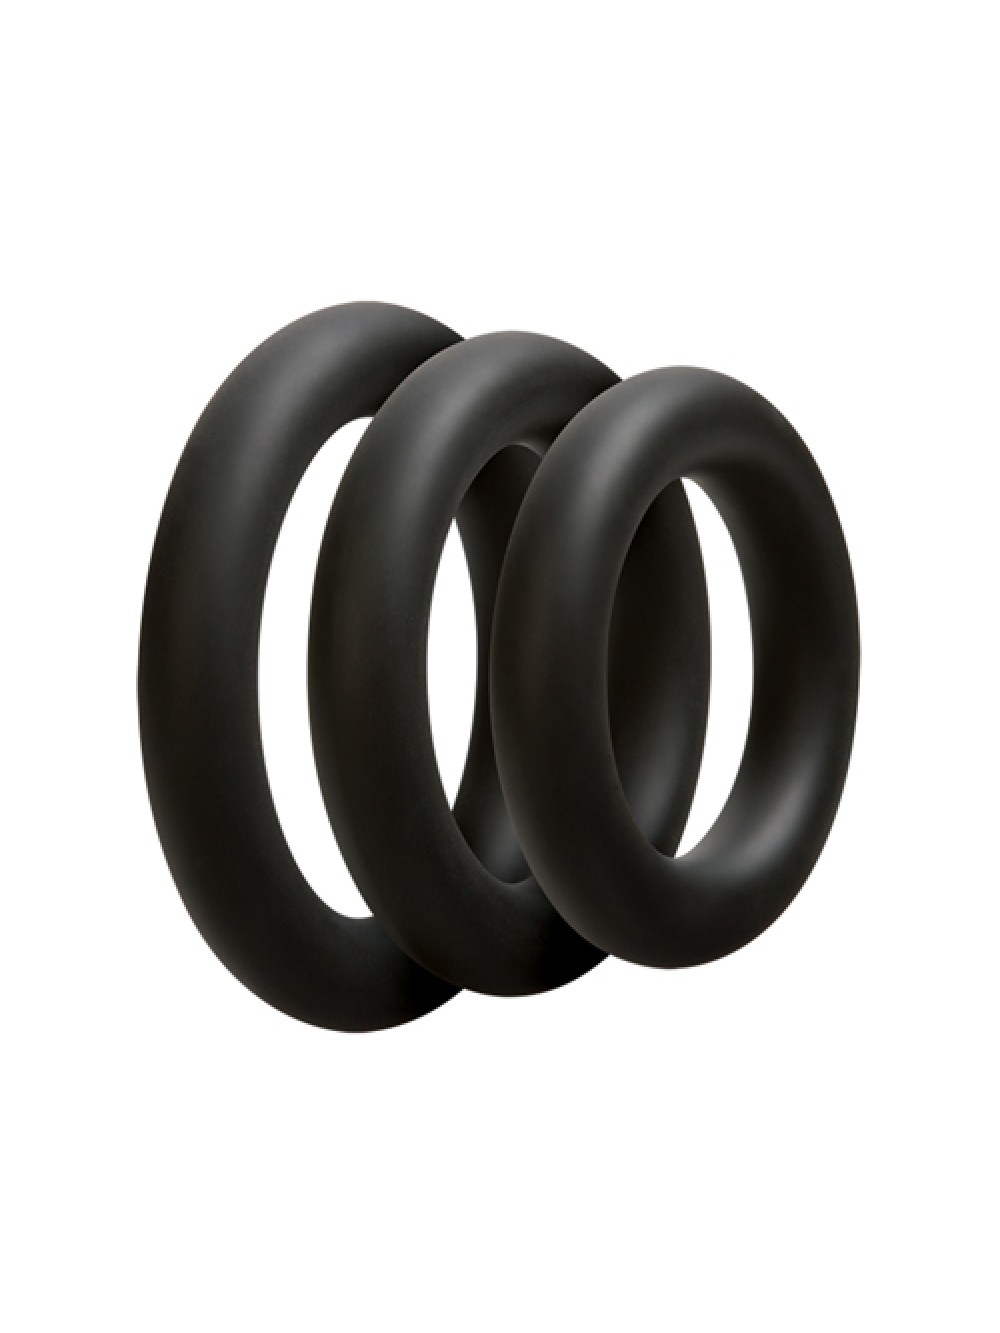 3 C-Ring Set - Thick - Black 782421020484